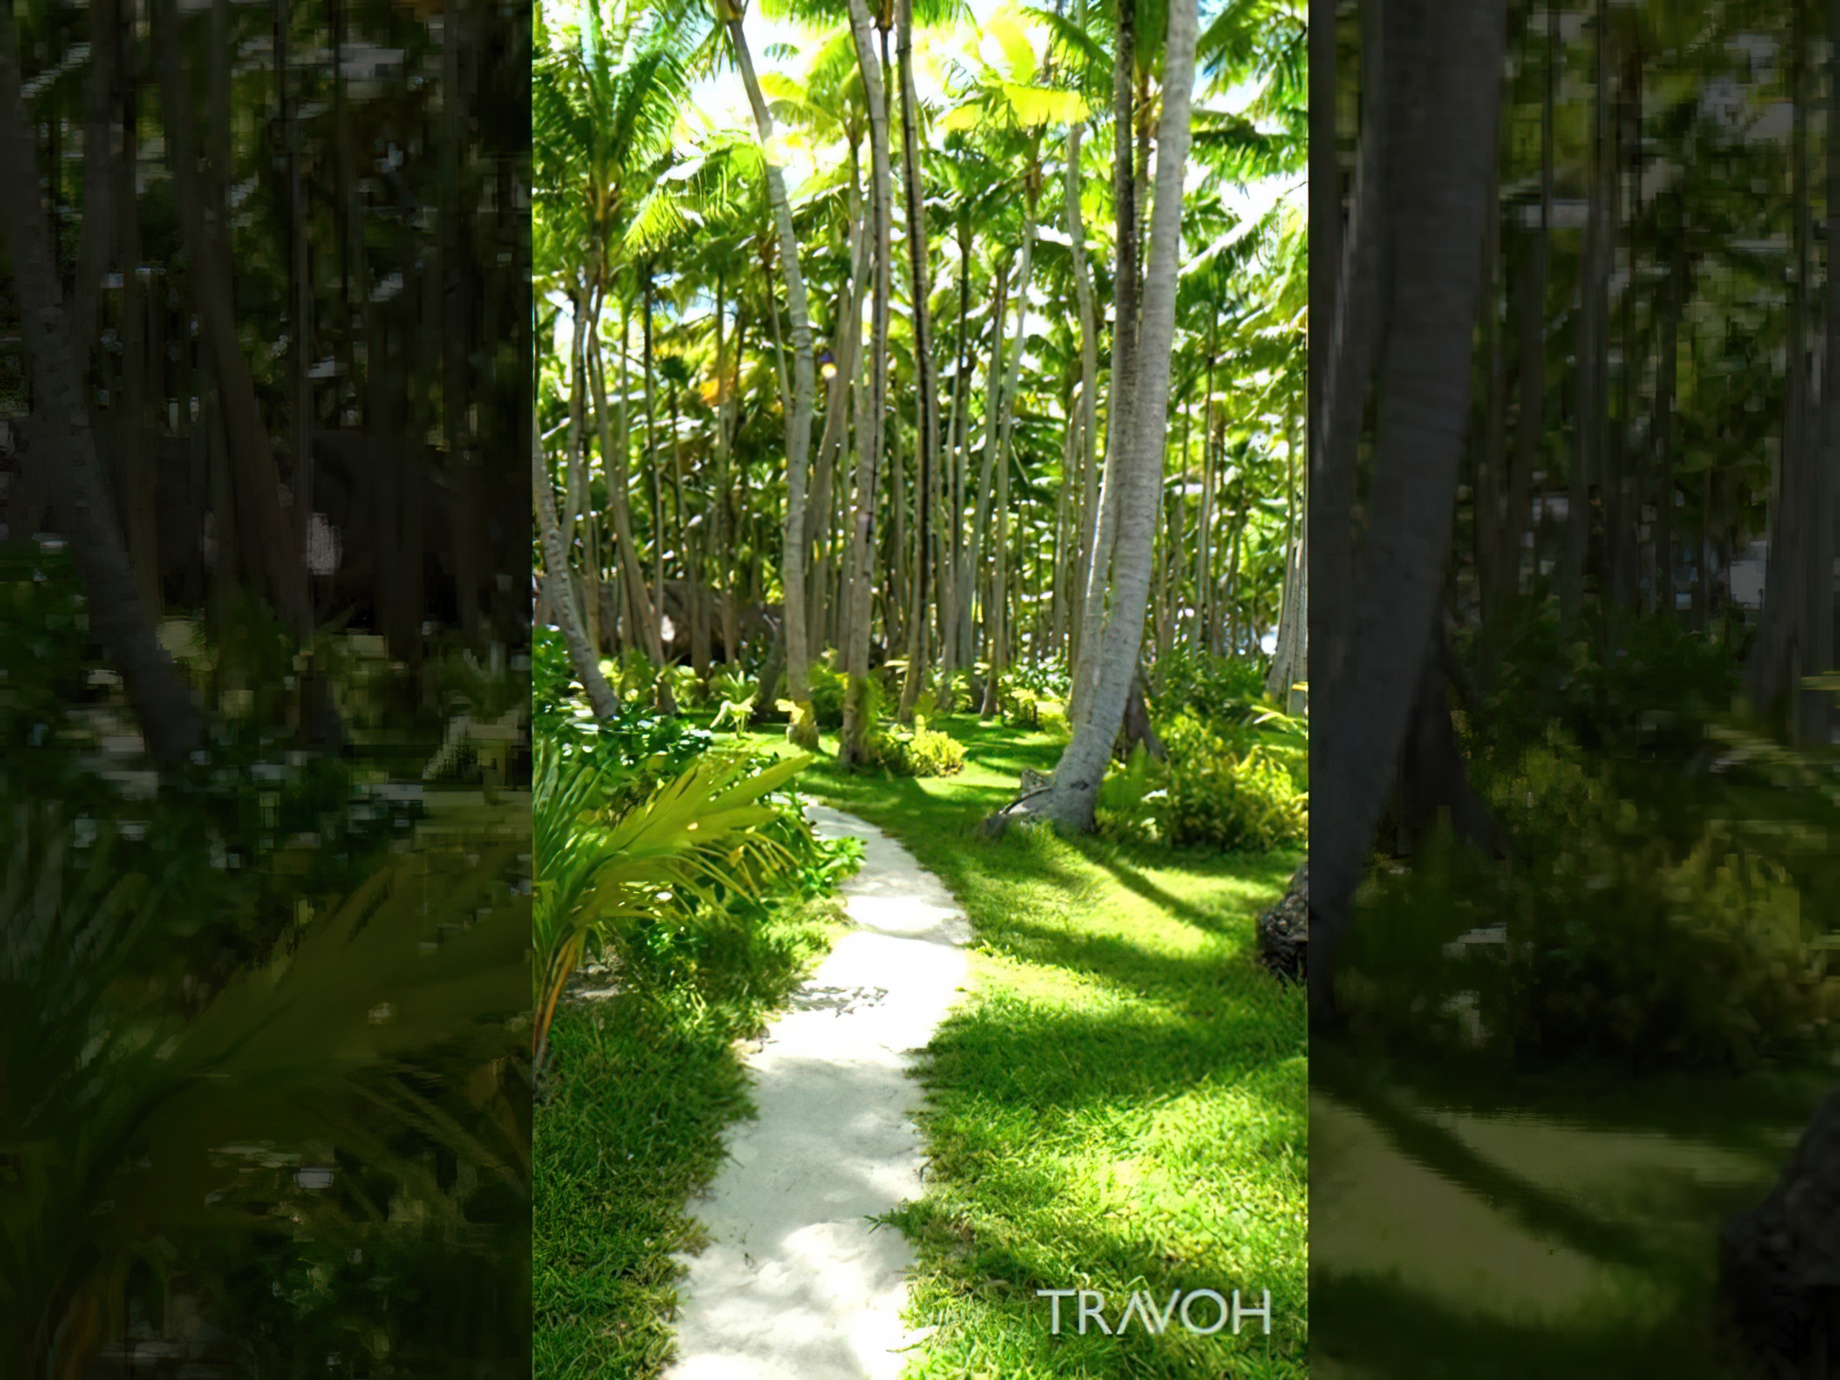 Lush Palm Trees - Motu Tane Tropical Island Paradise - Bora Bora, French Polynesia #shorts